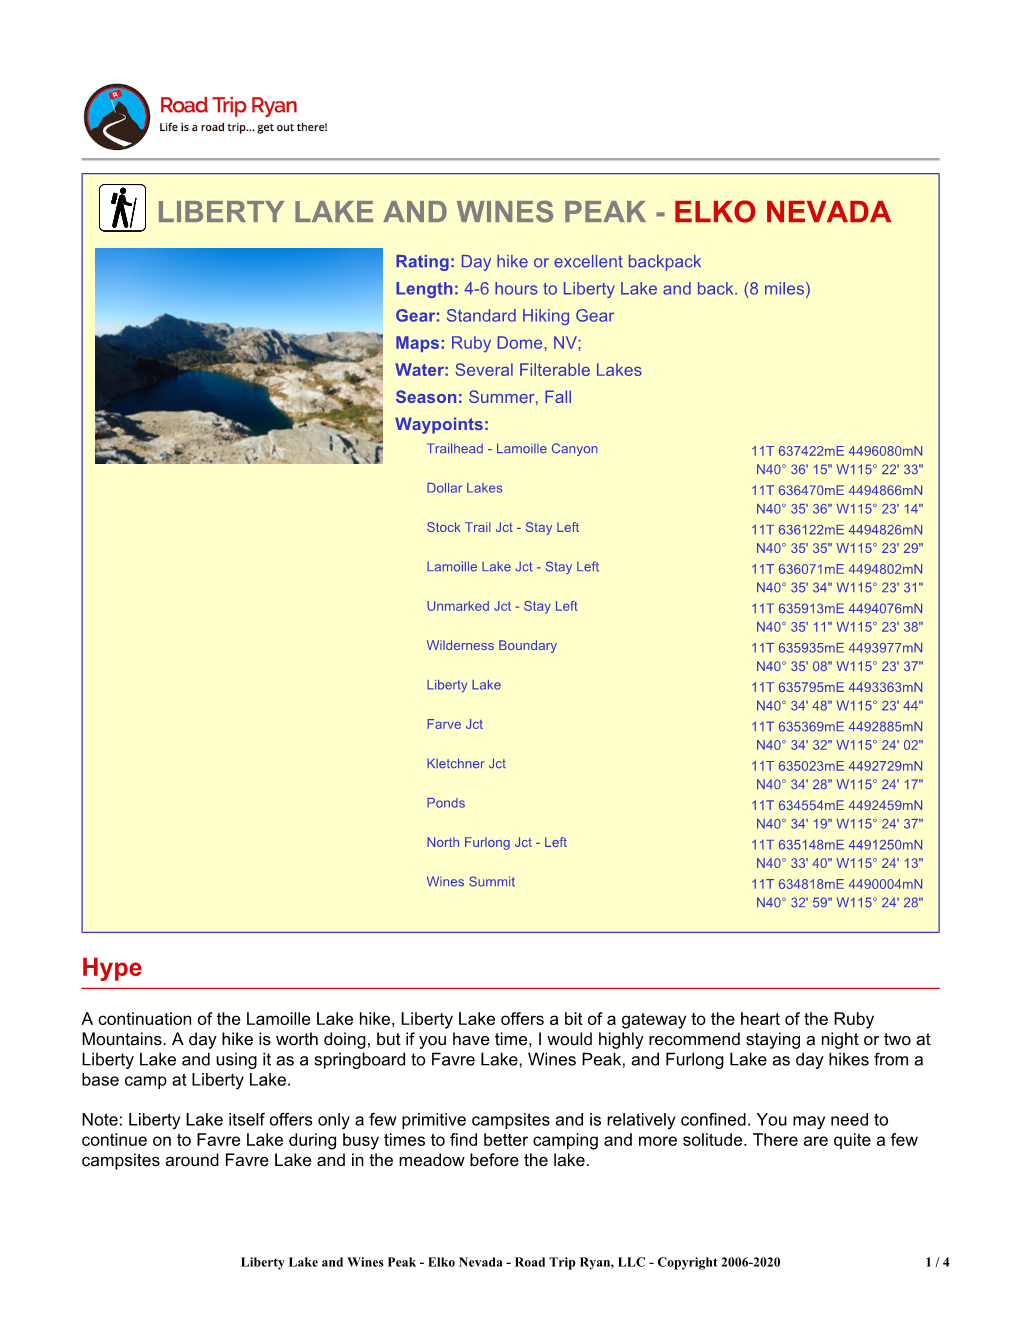 Liberty Lake and Wines Peak - Elko Nevada